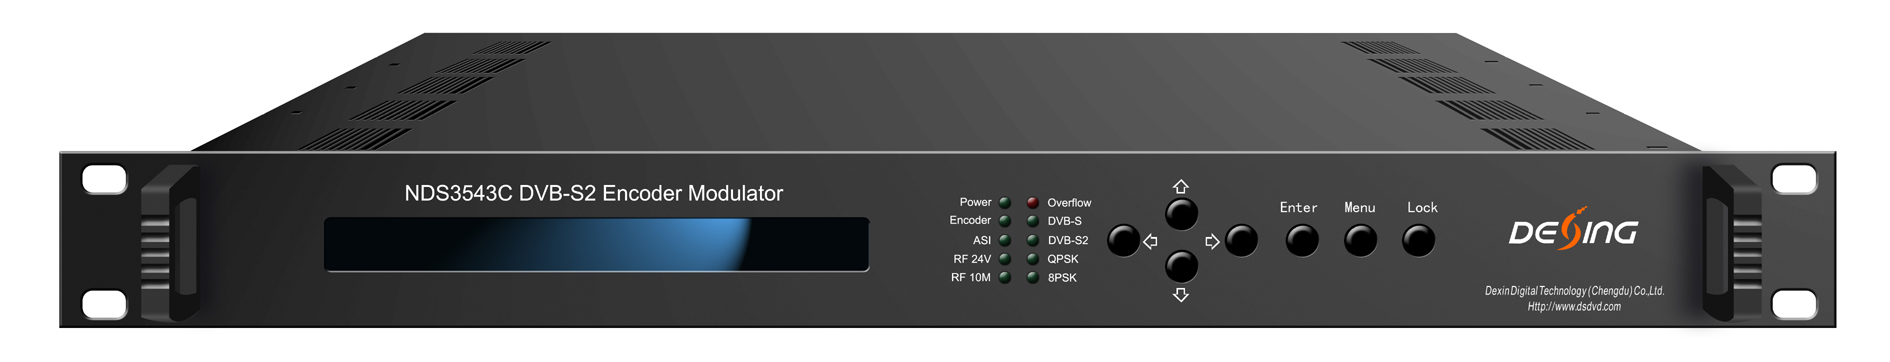 24V out dvb-s2 encoder modulator